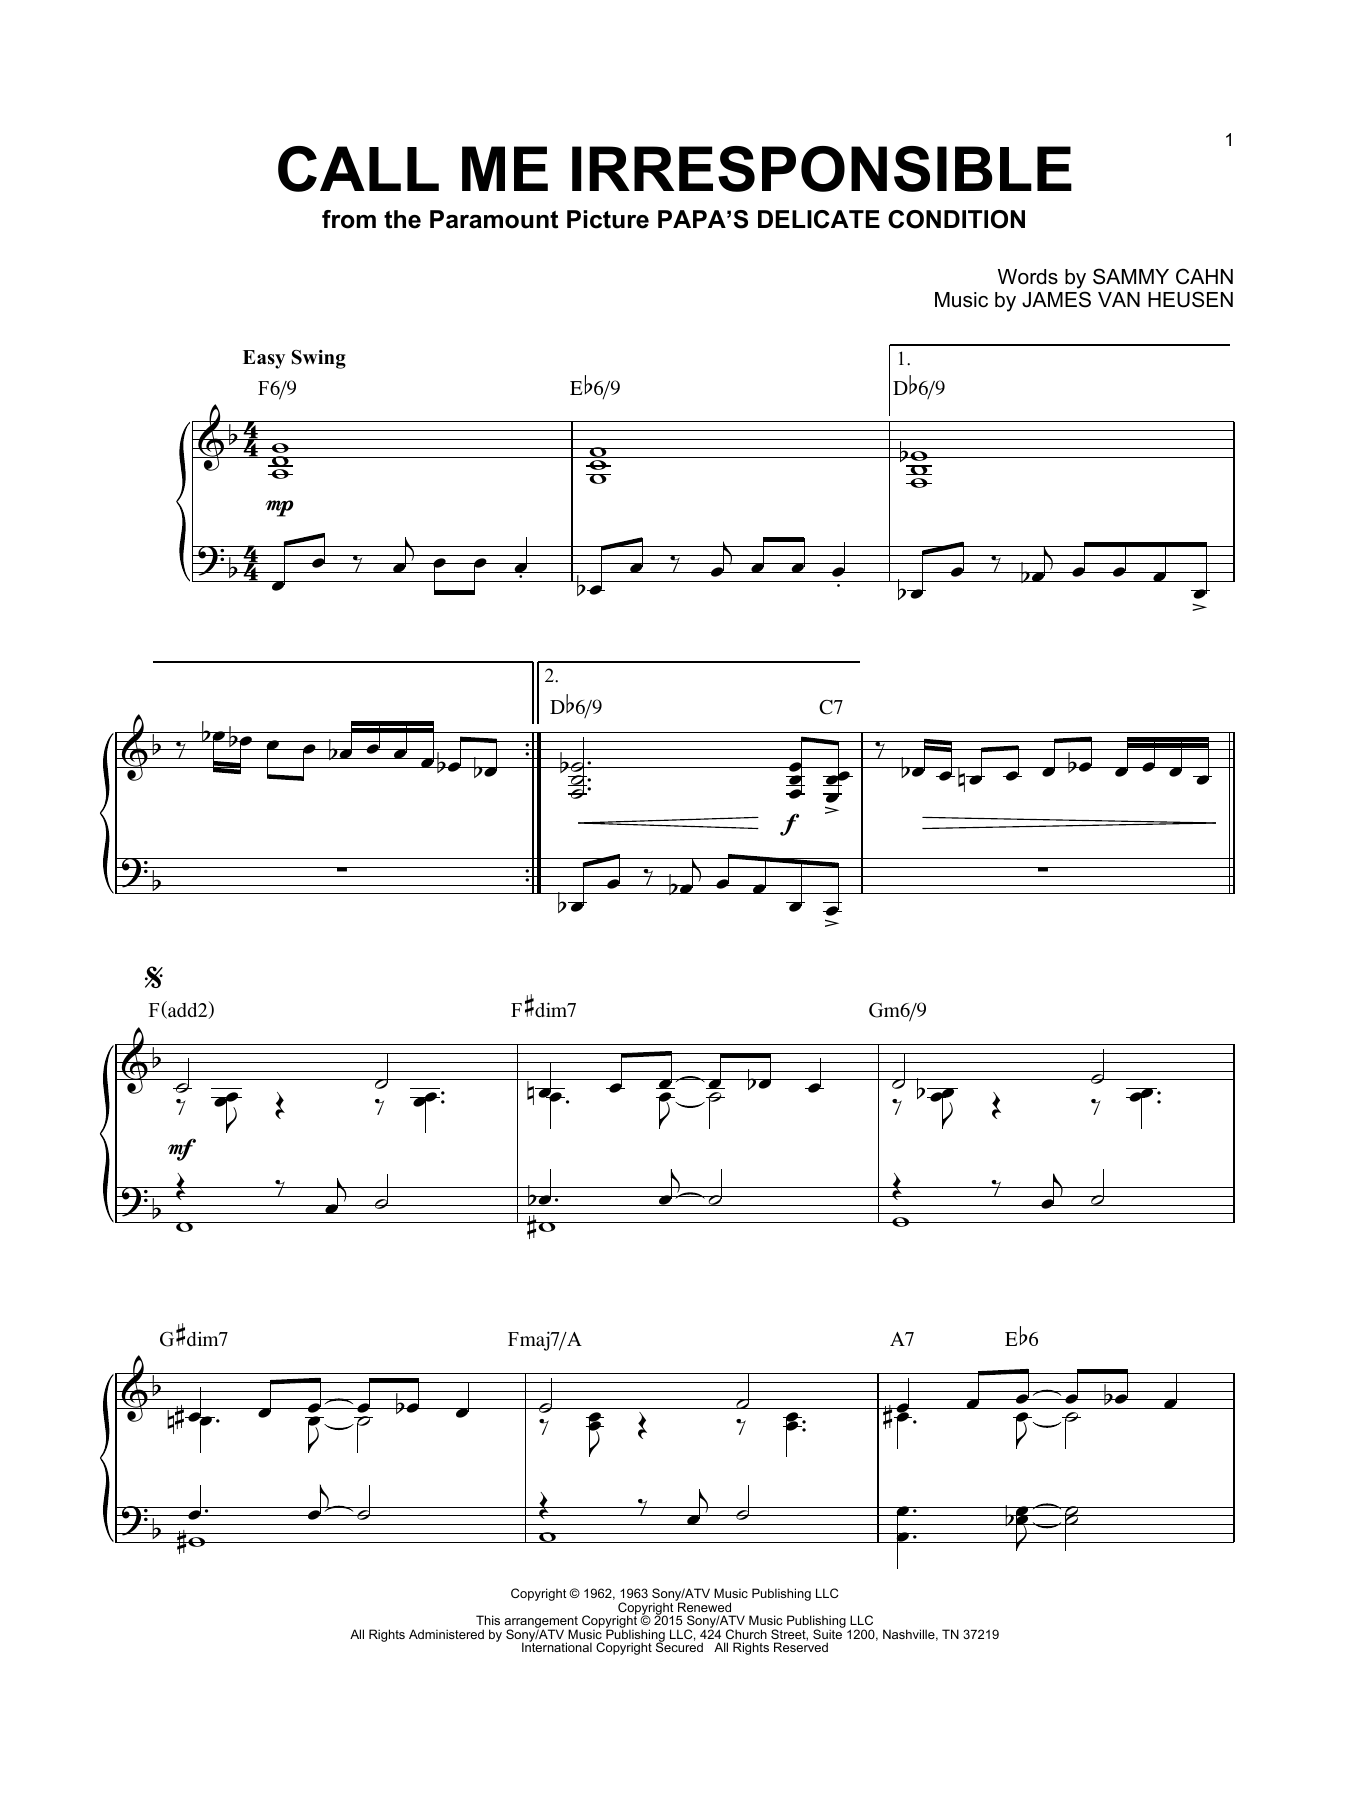 Download Frank Sinatra Call Me Irresponsible [Jazz version] (a Sheet Music